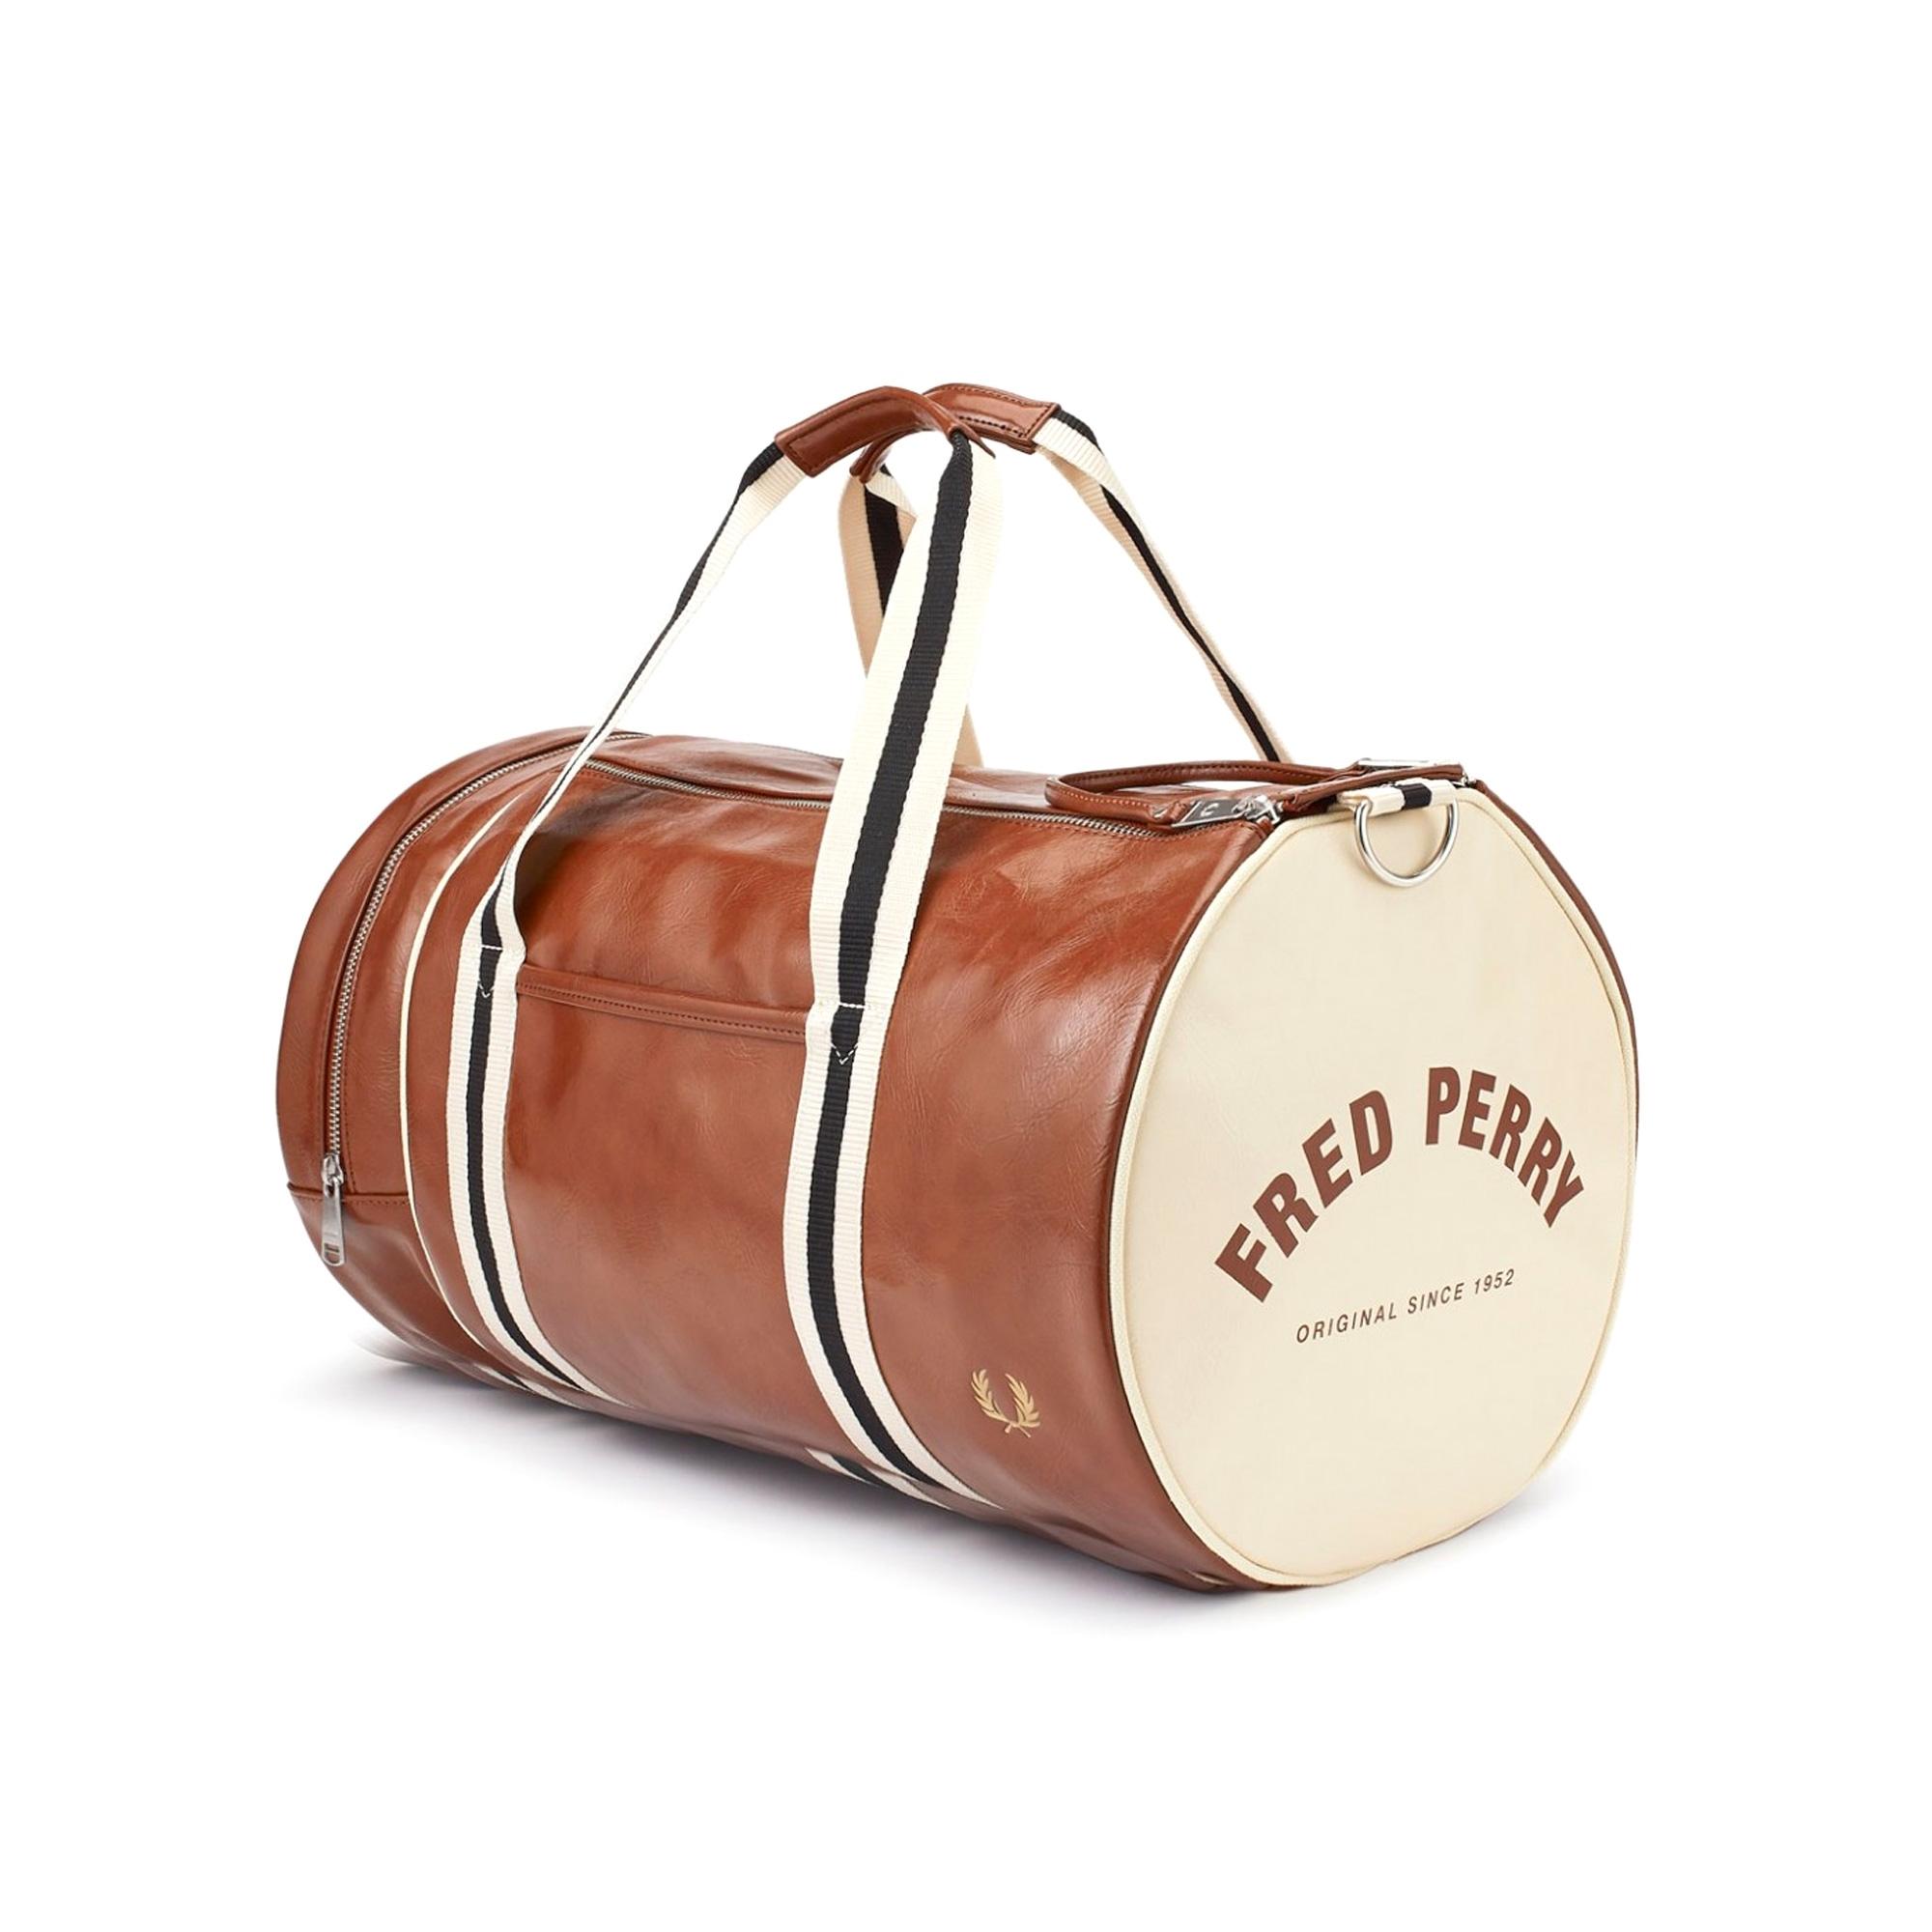 Fred Perry Classic Barrel Bag in Tan/Ecru (Brown) for Men - Lyst